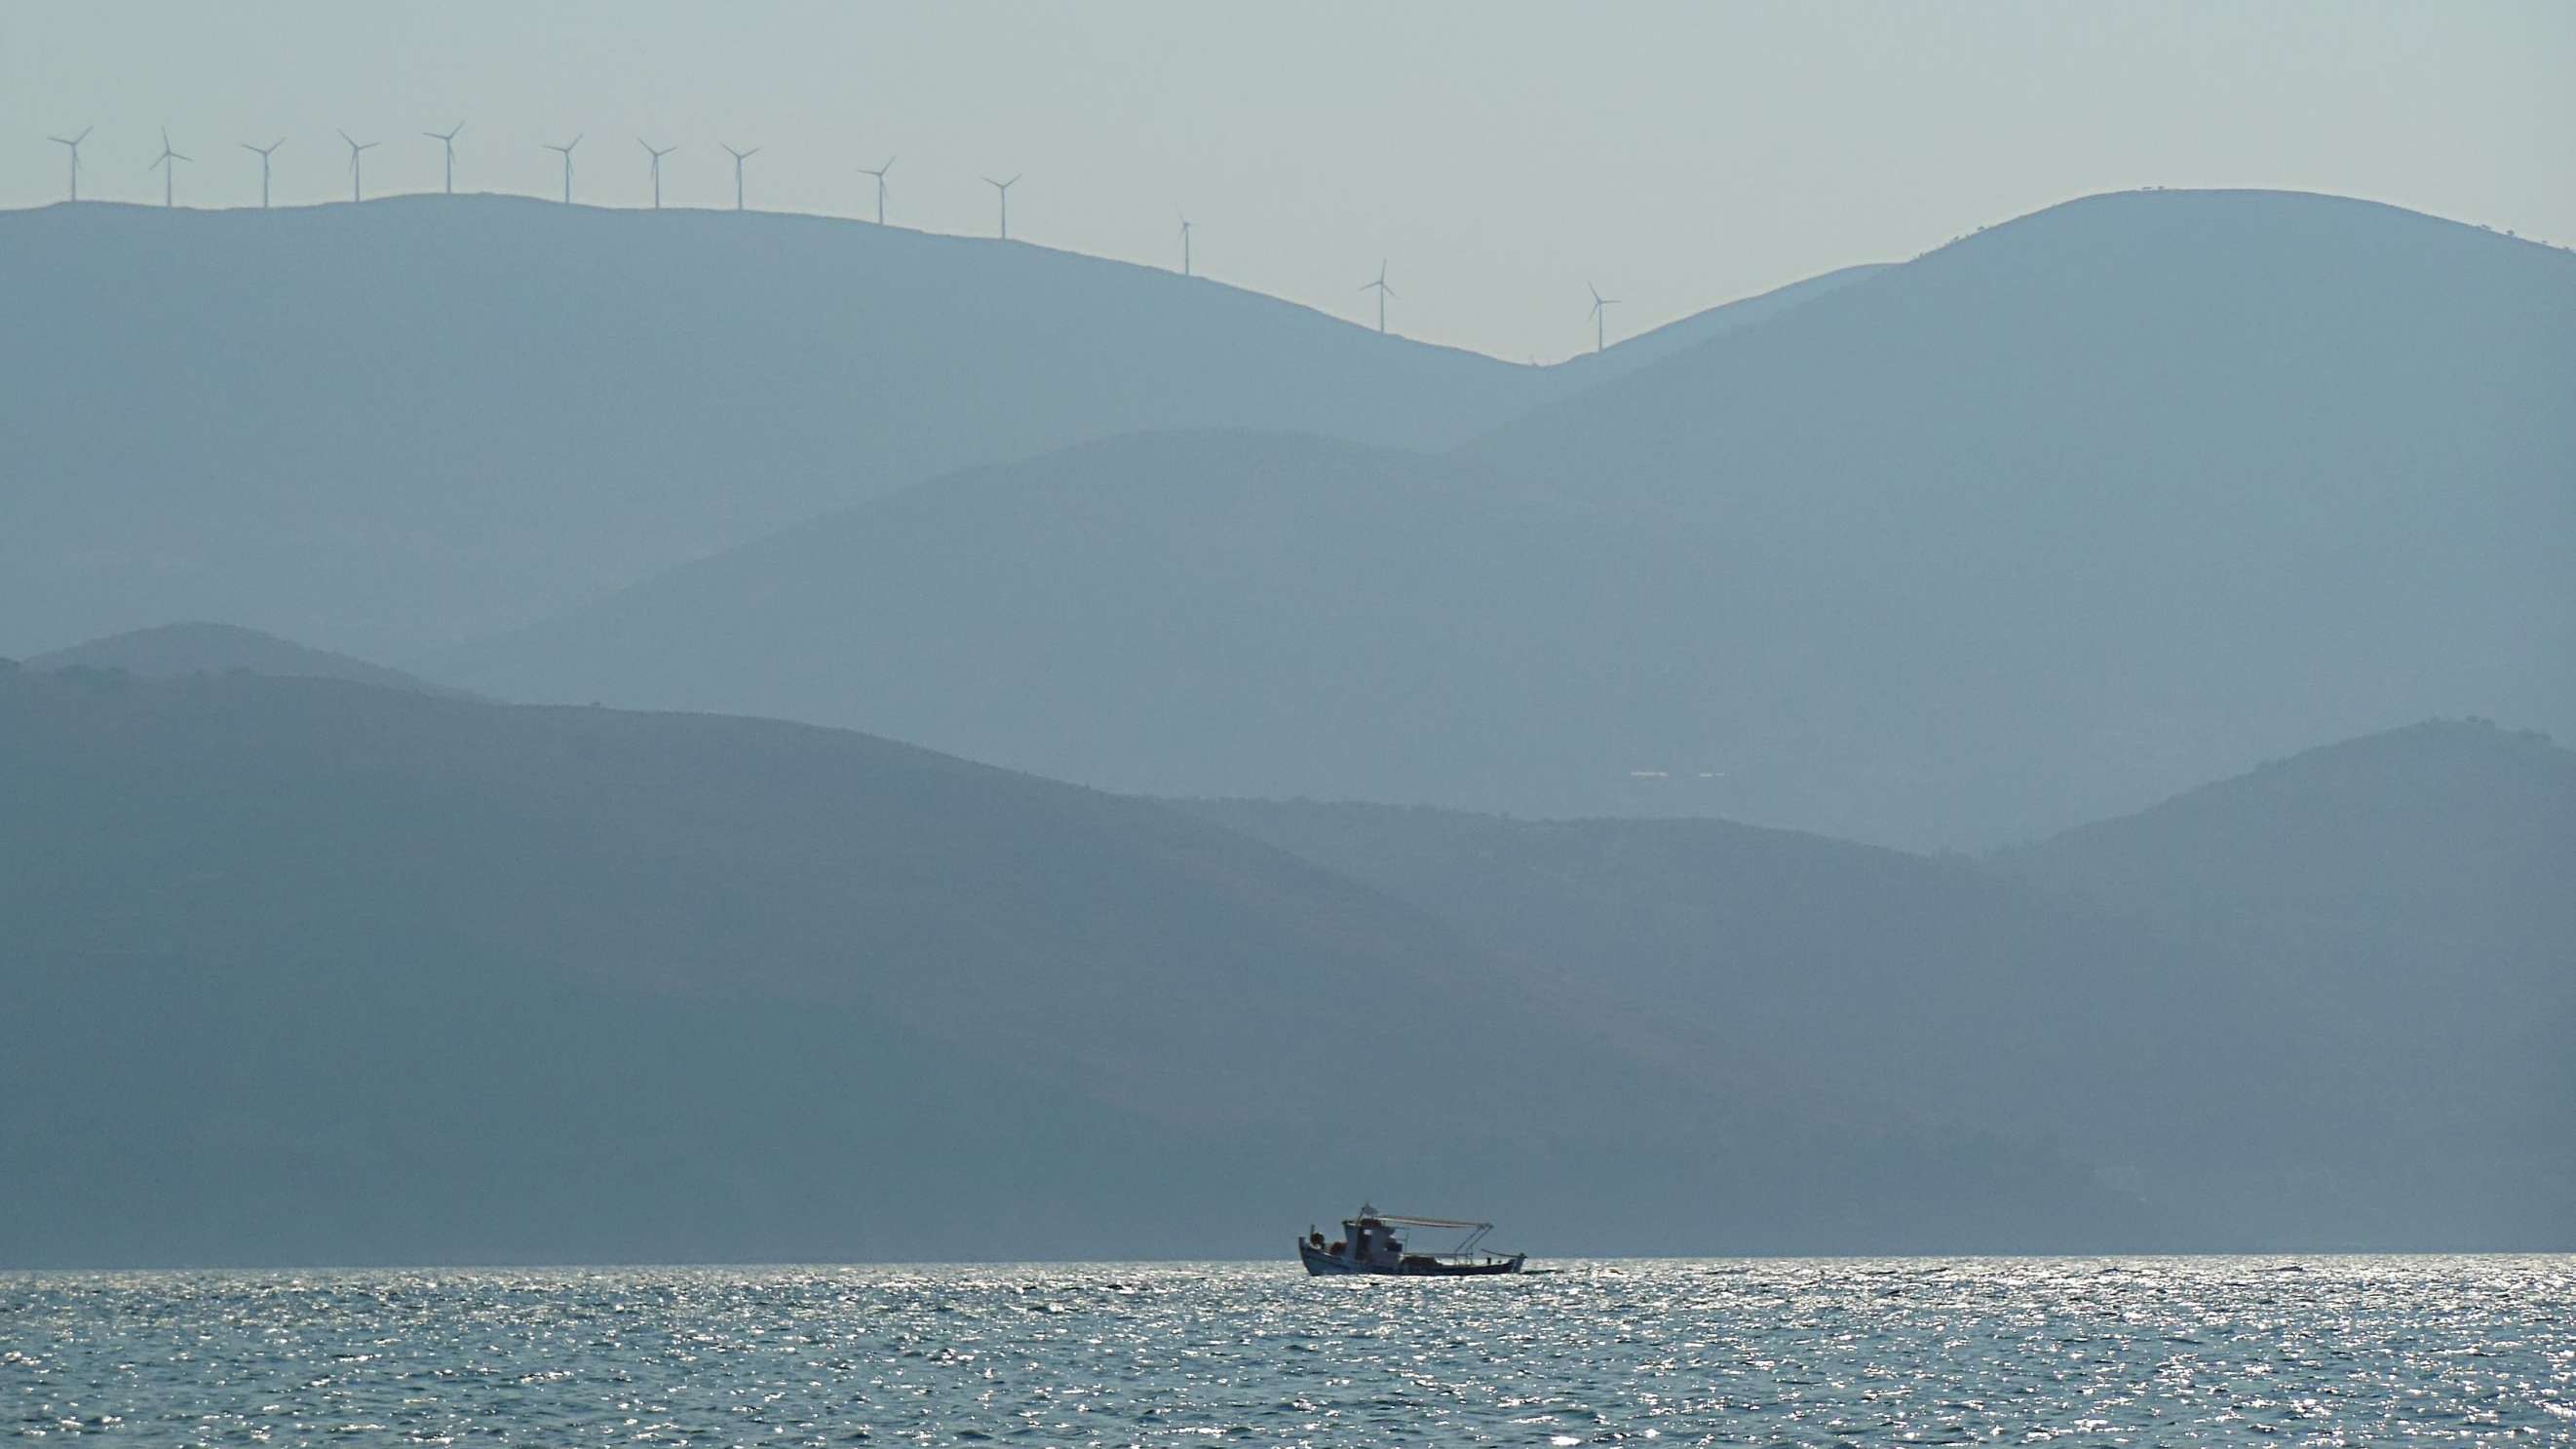 Wind turbines over the Lixouri bay